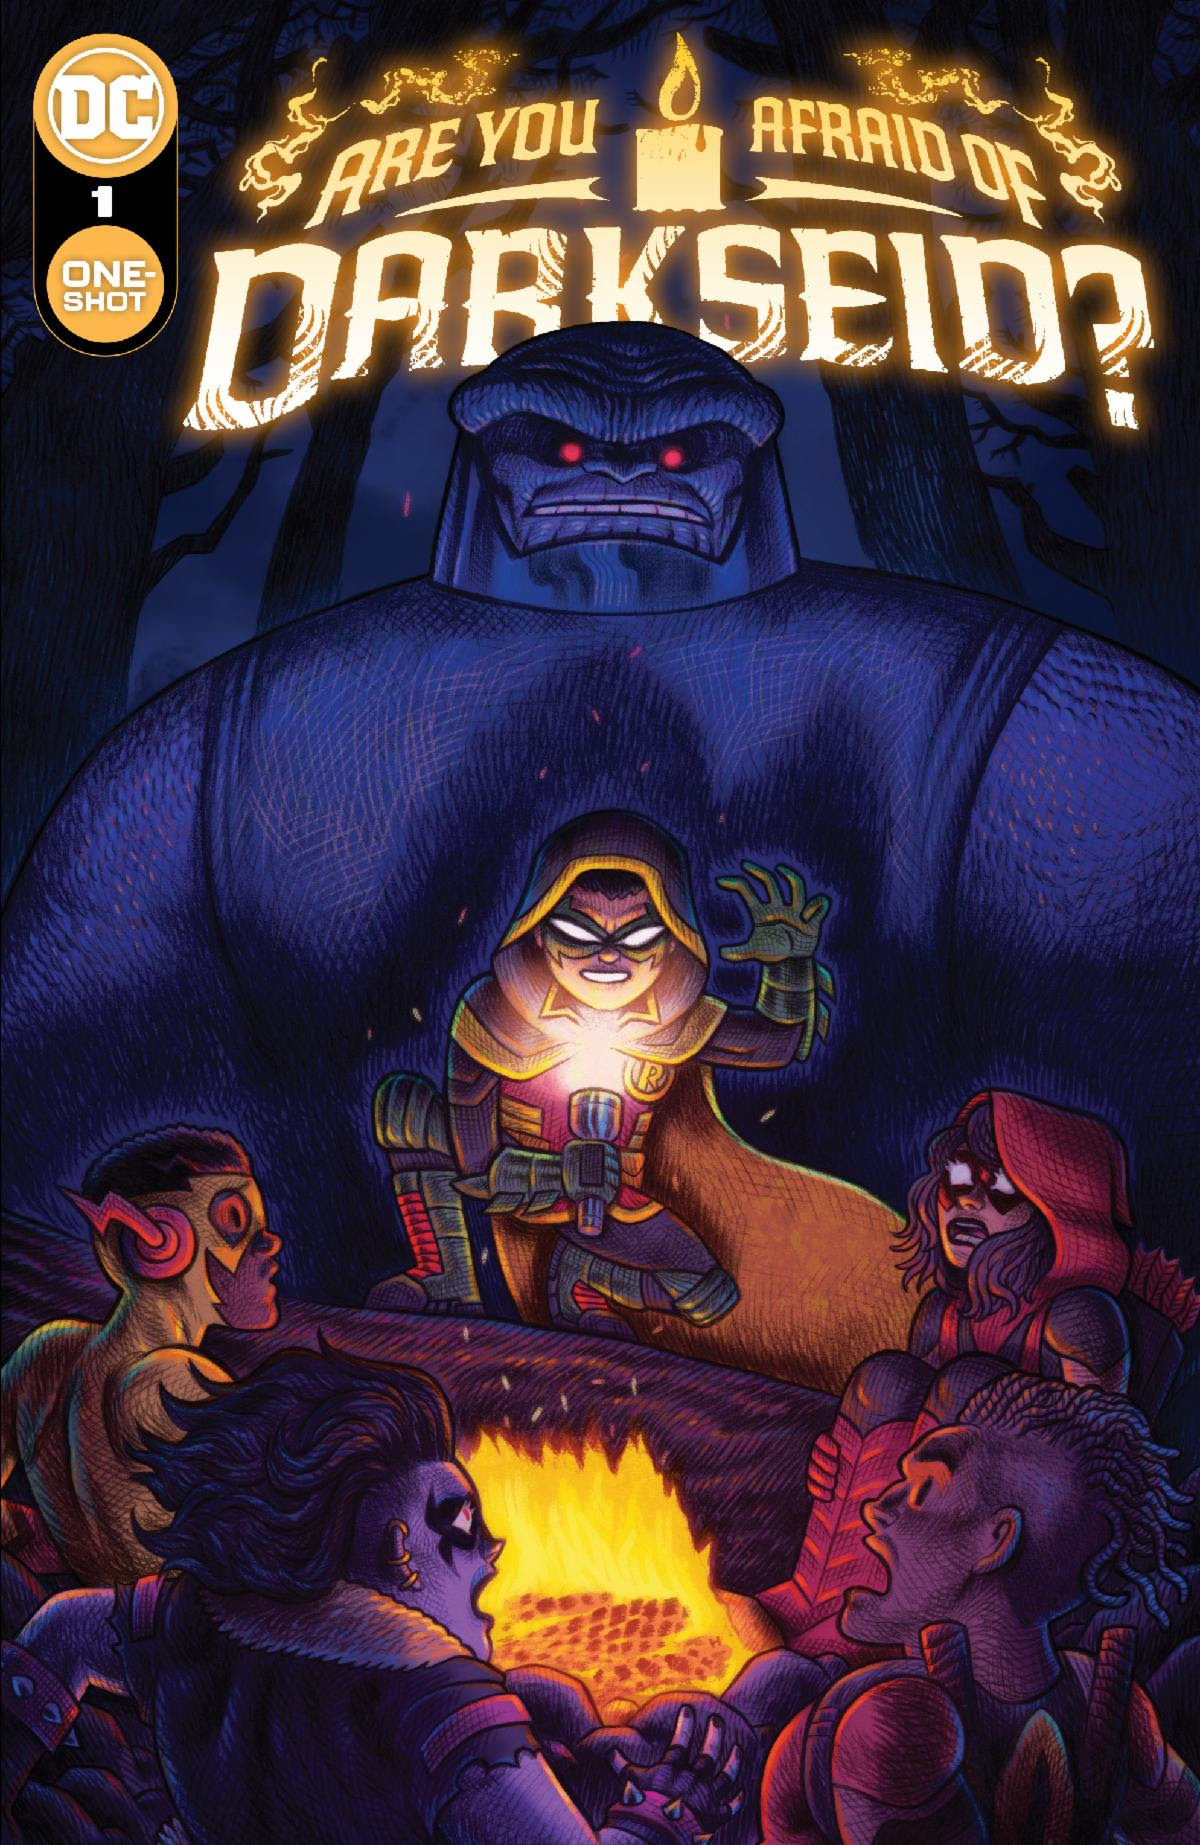 Are You Afraid of Darkseid #1 (One Shot) Cover A Dan Hipp